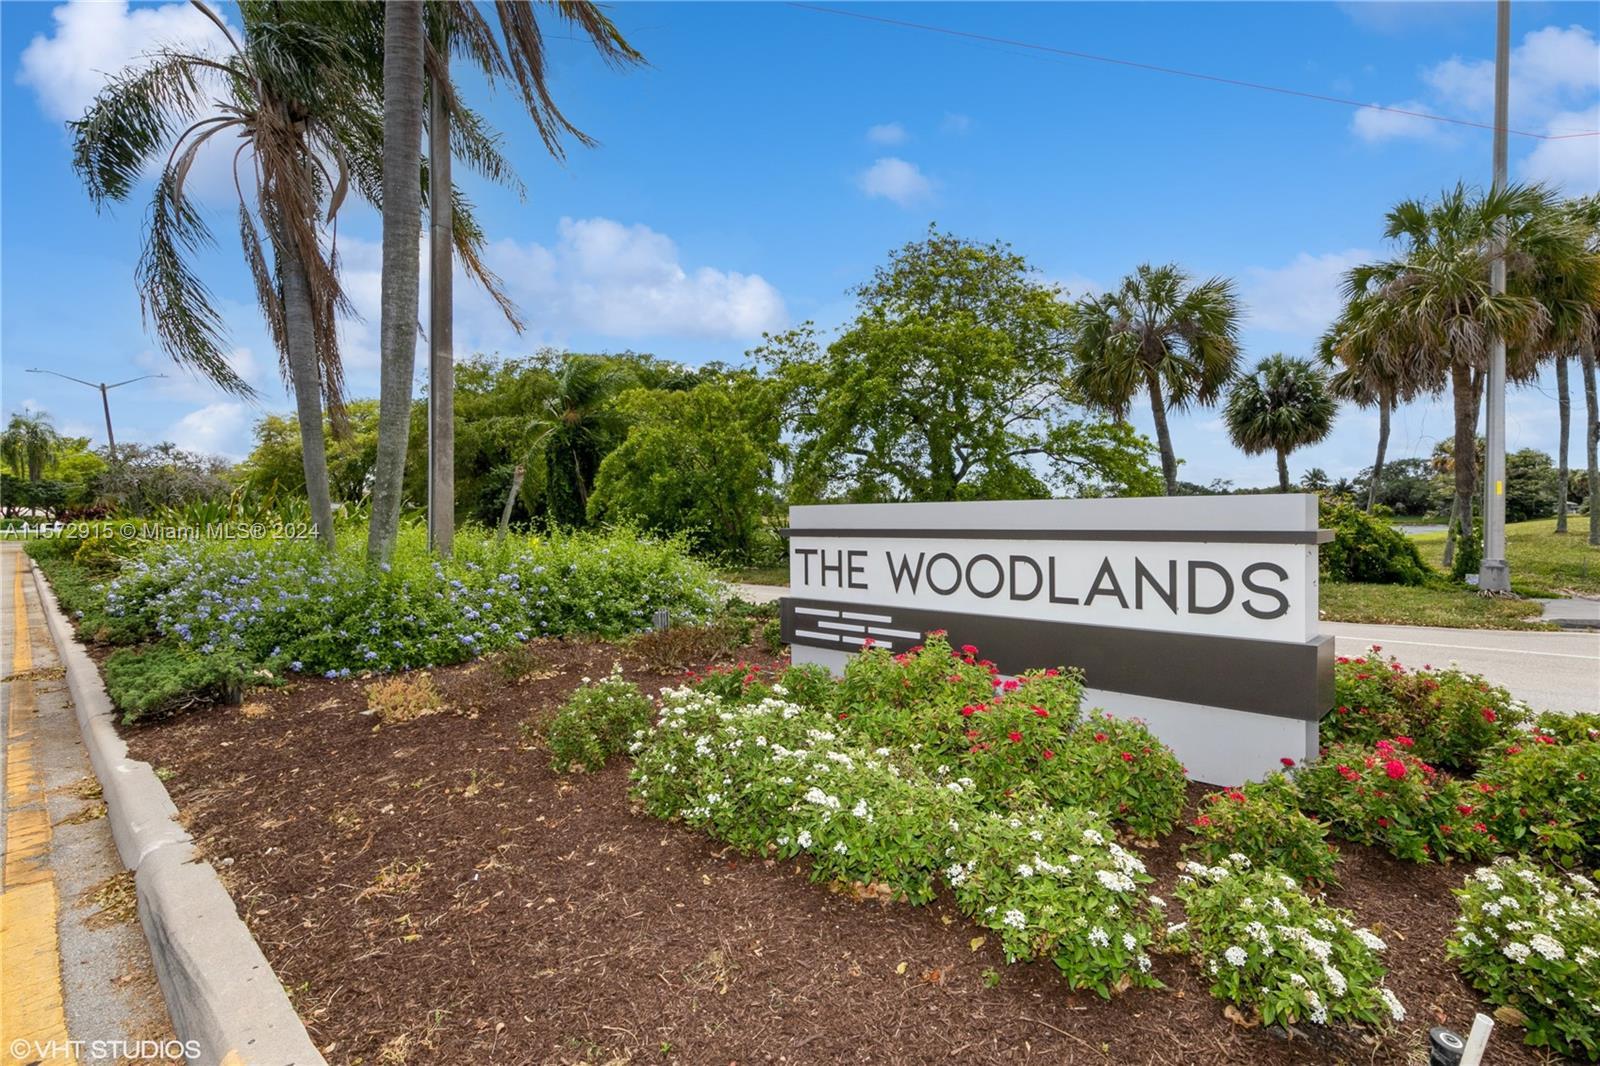 Photo of 5207 Woodlands Blvd in Tamarac, FL